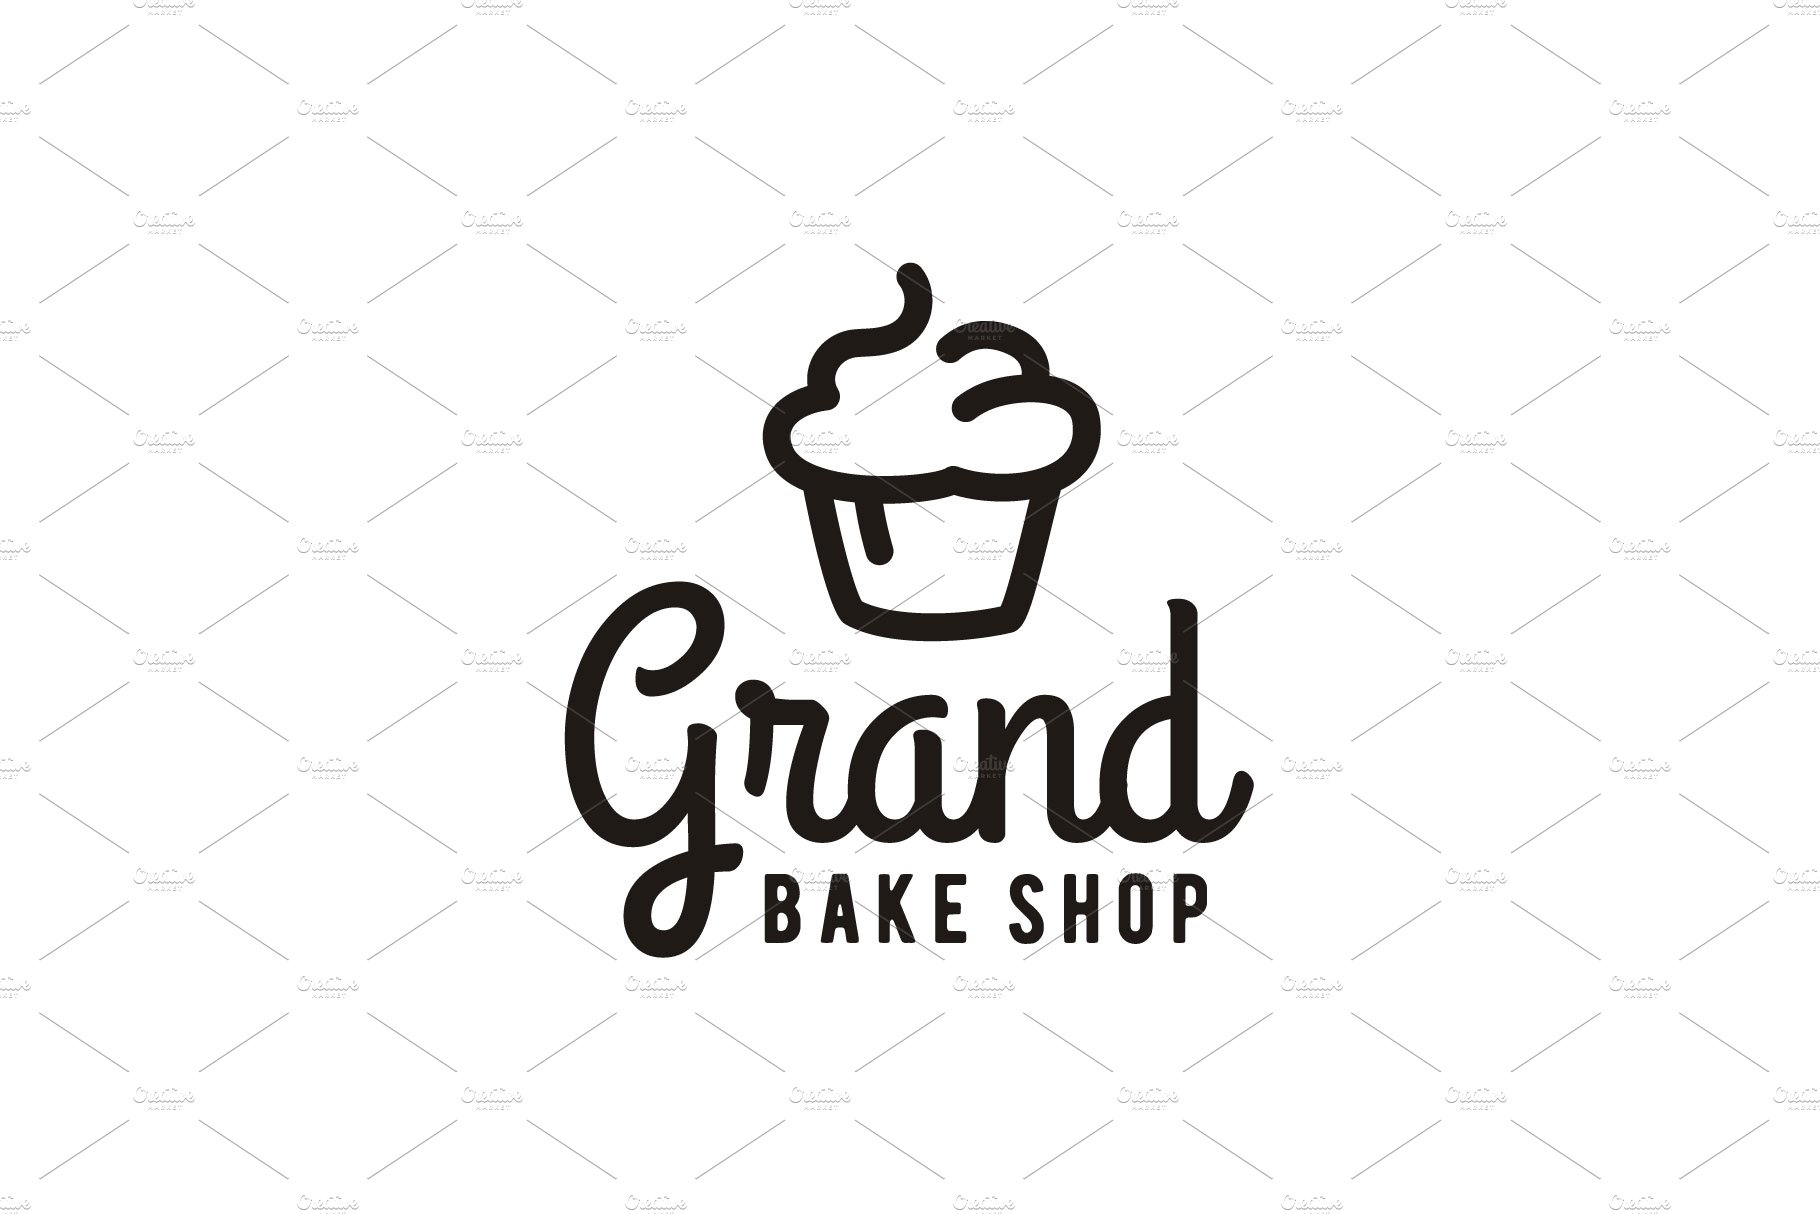 Simple Cupcake Bakery Bake Shop Logo cover image.